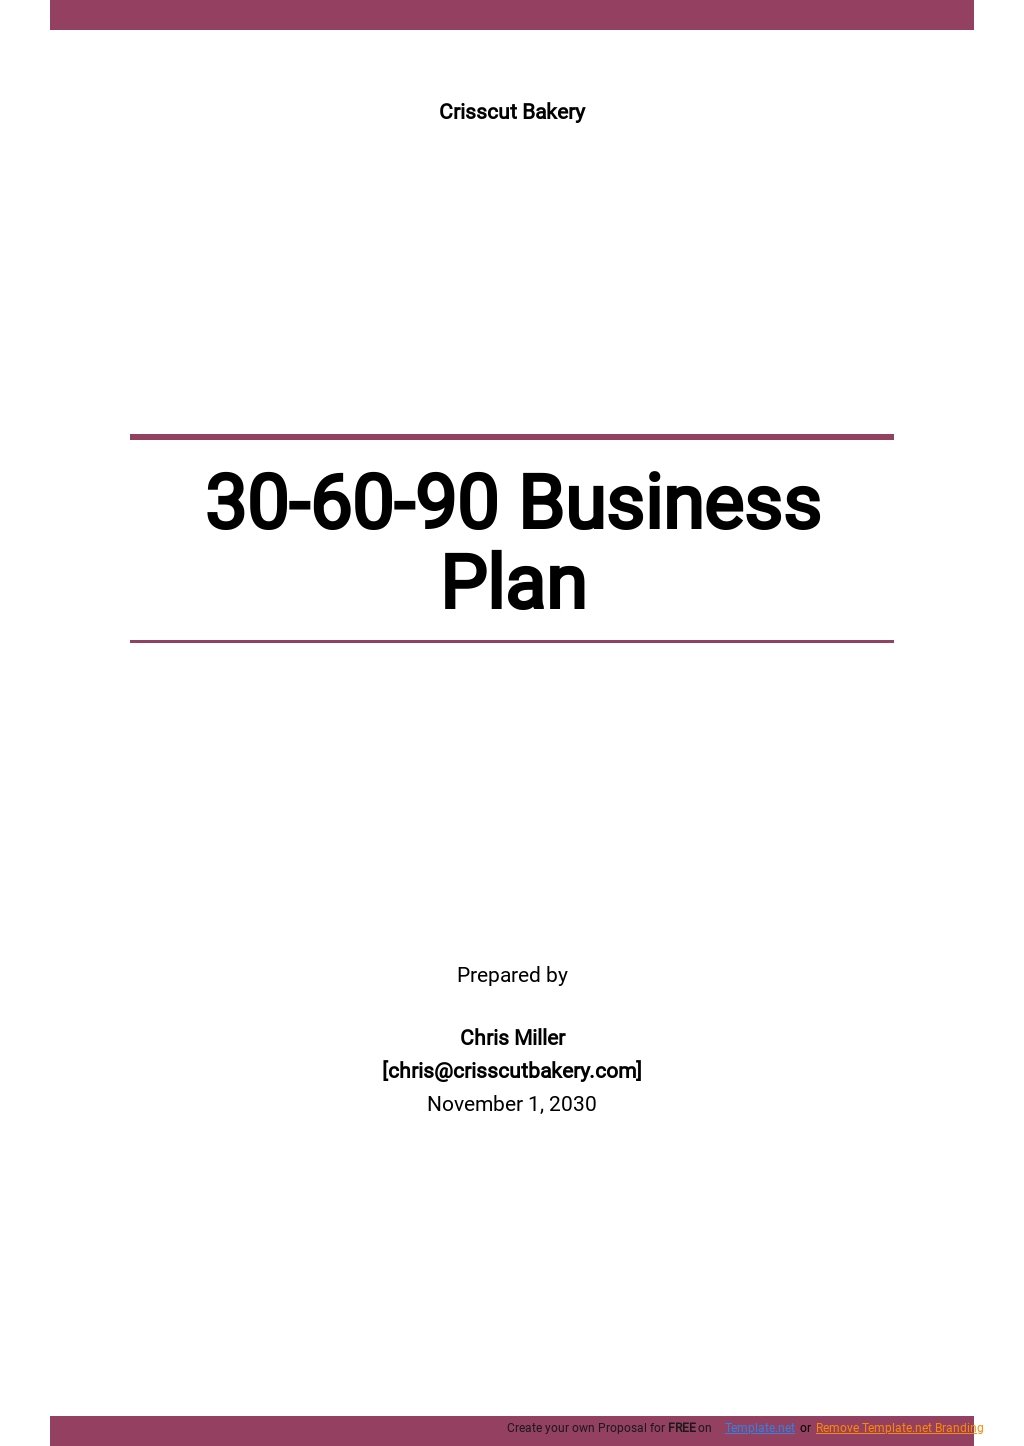 30 60 90 New Business Plan Template